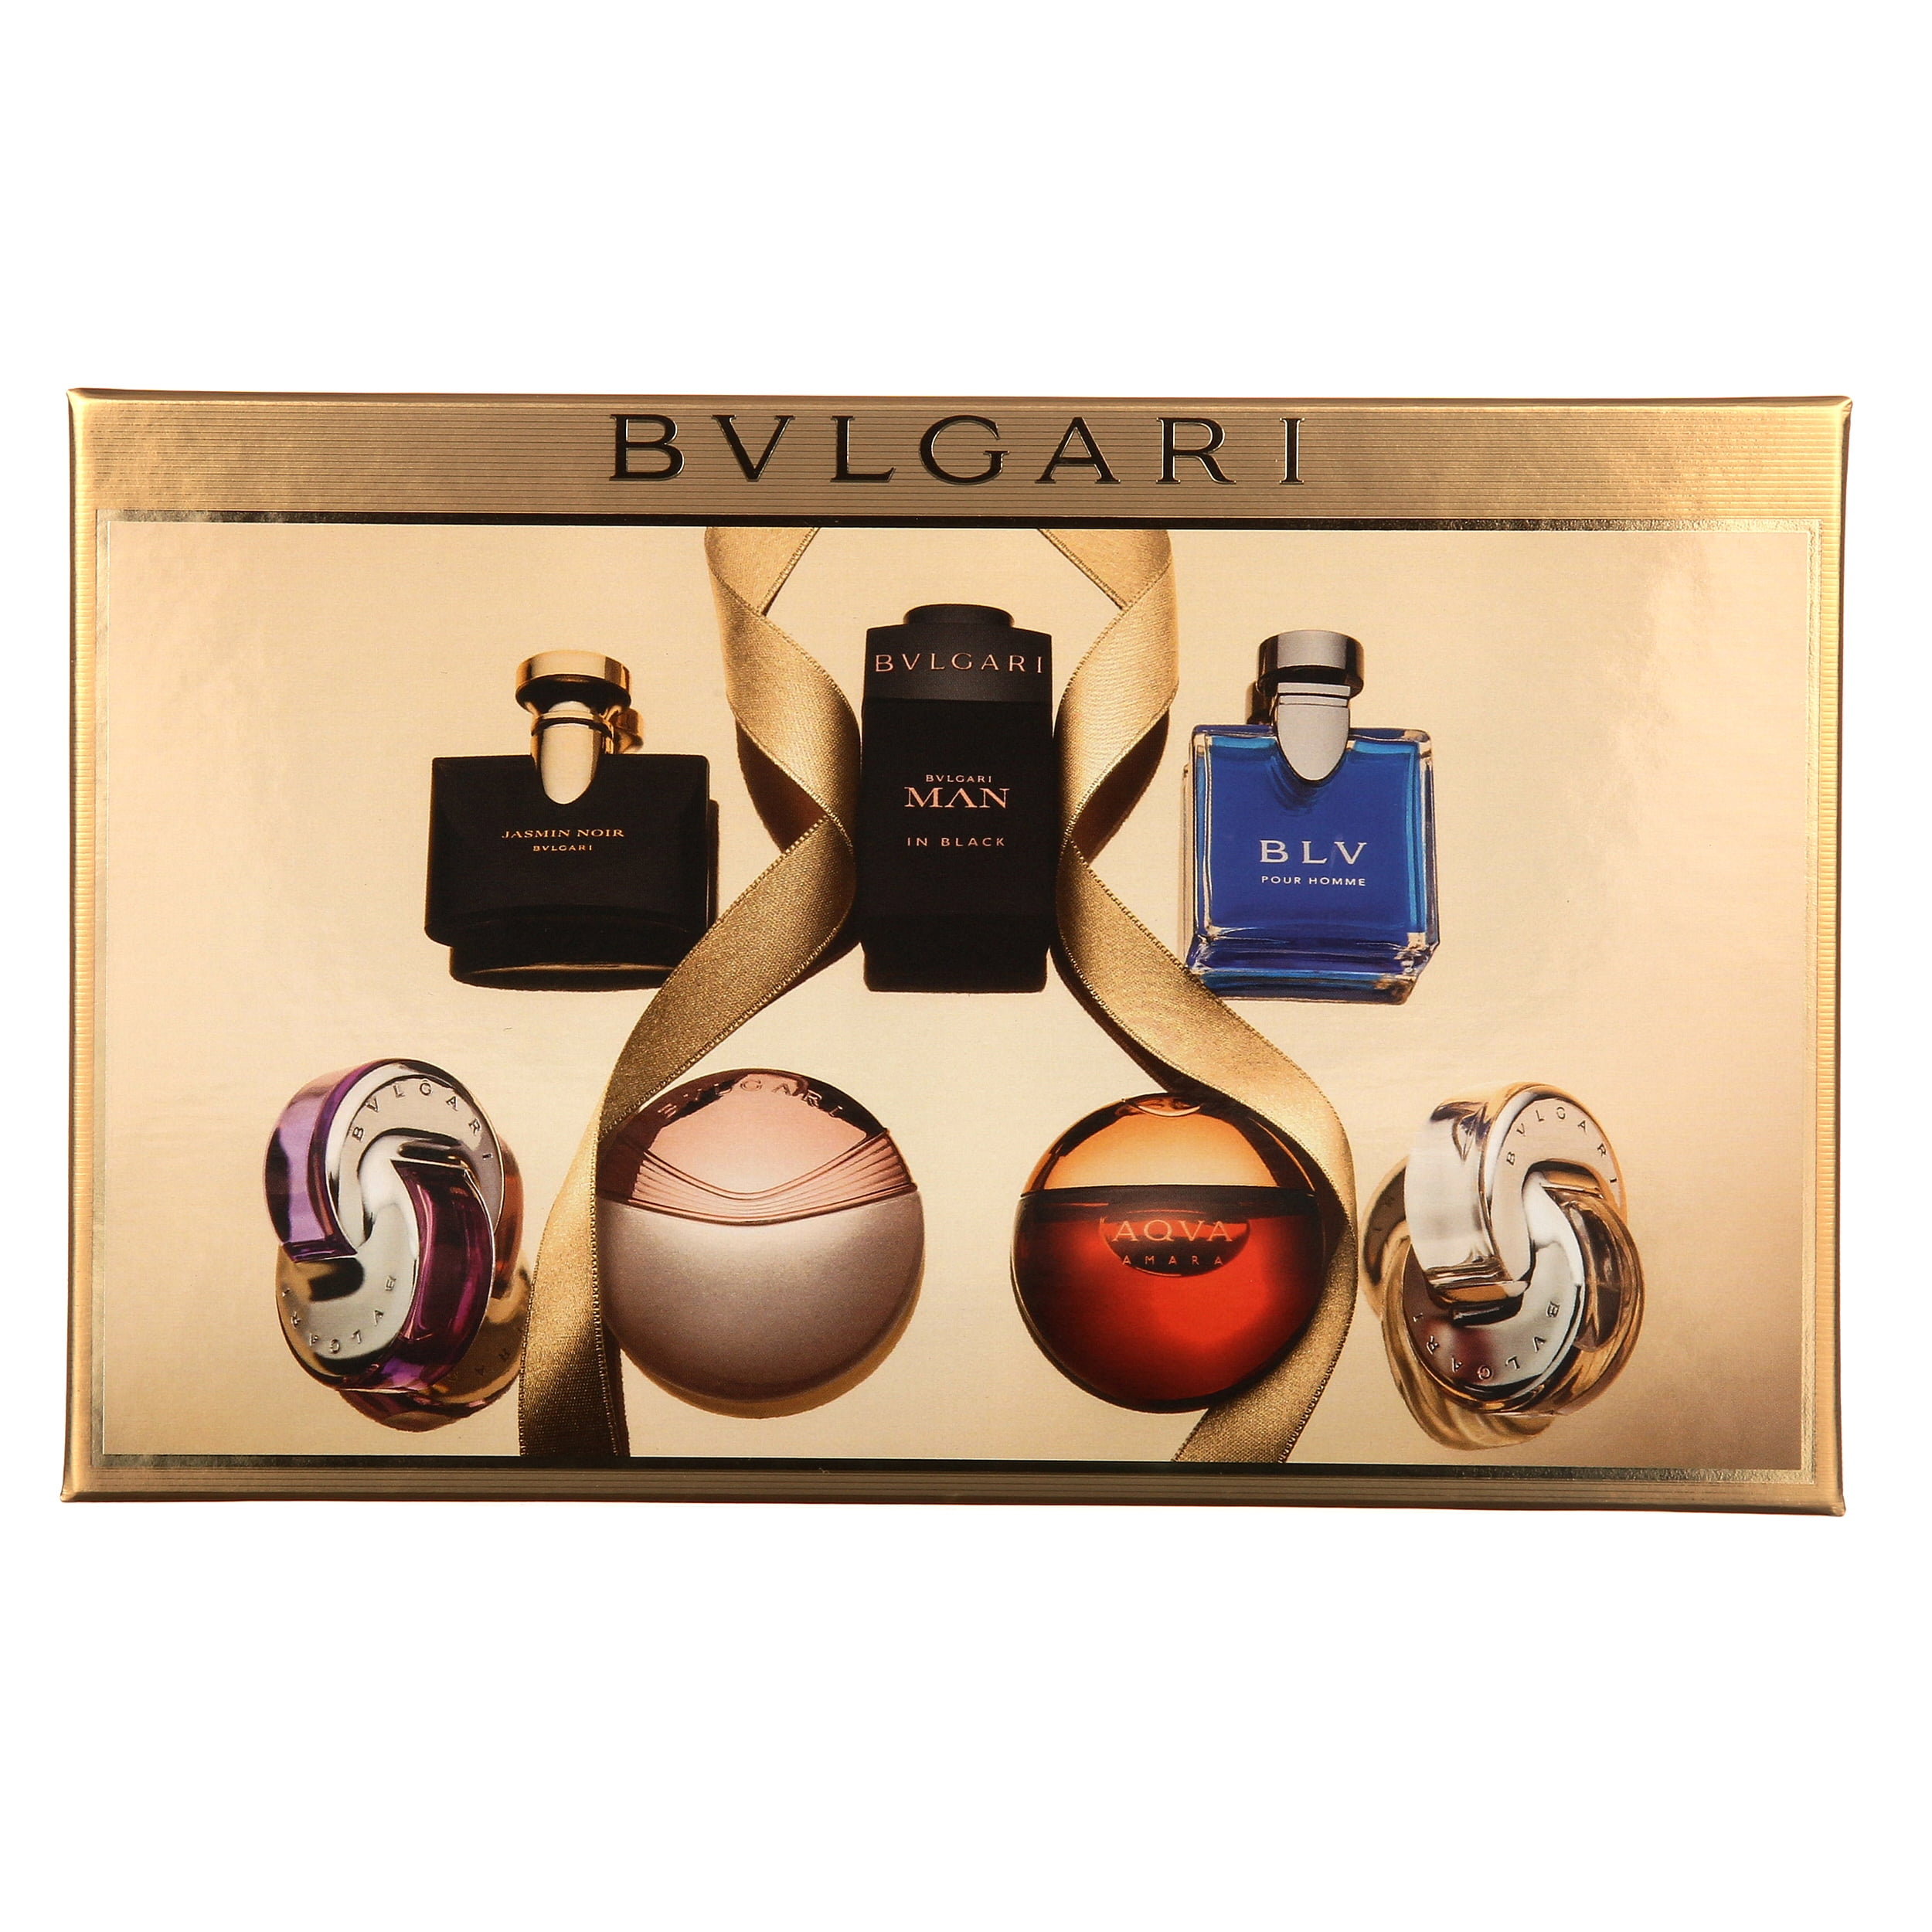 Bulgari Value Bvlgari The Iconic Miniature Collection Piece